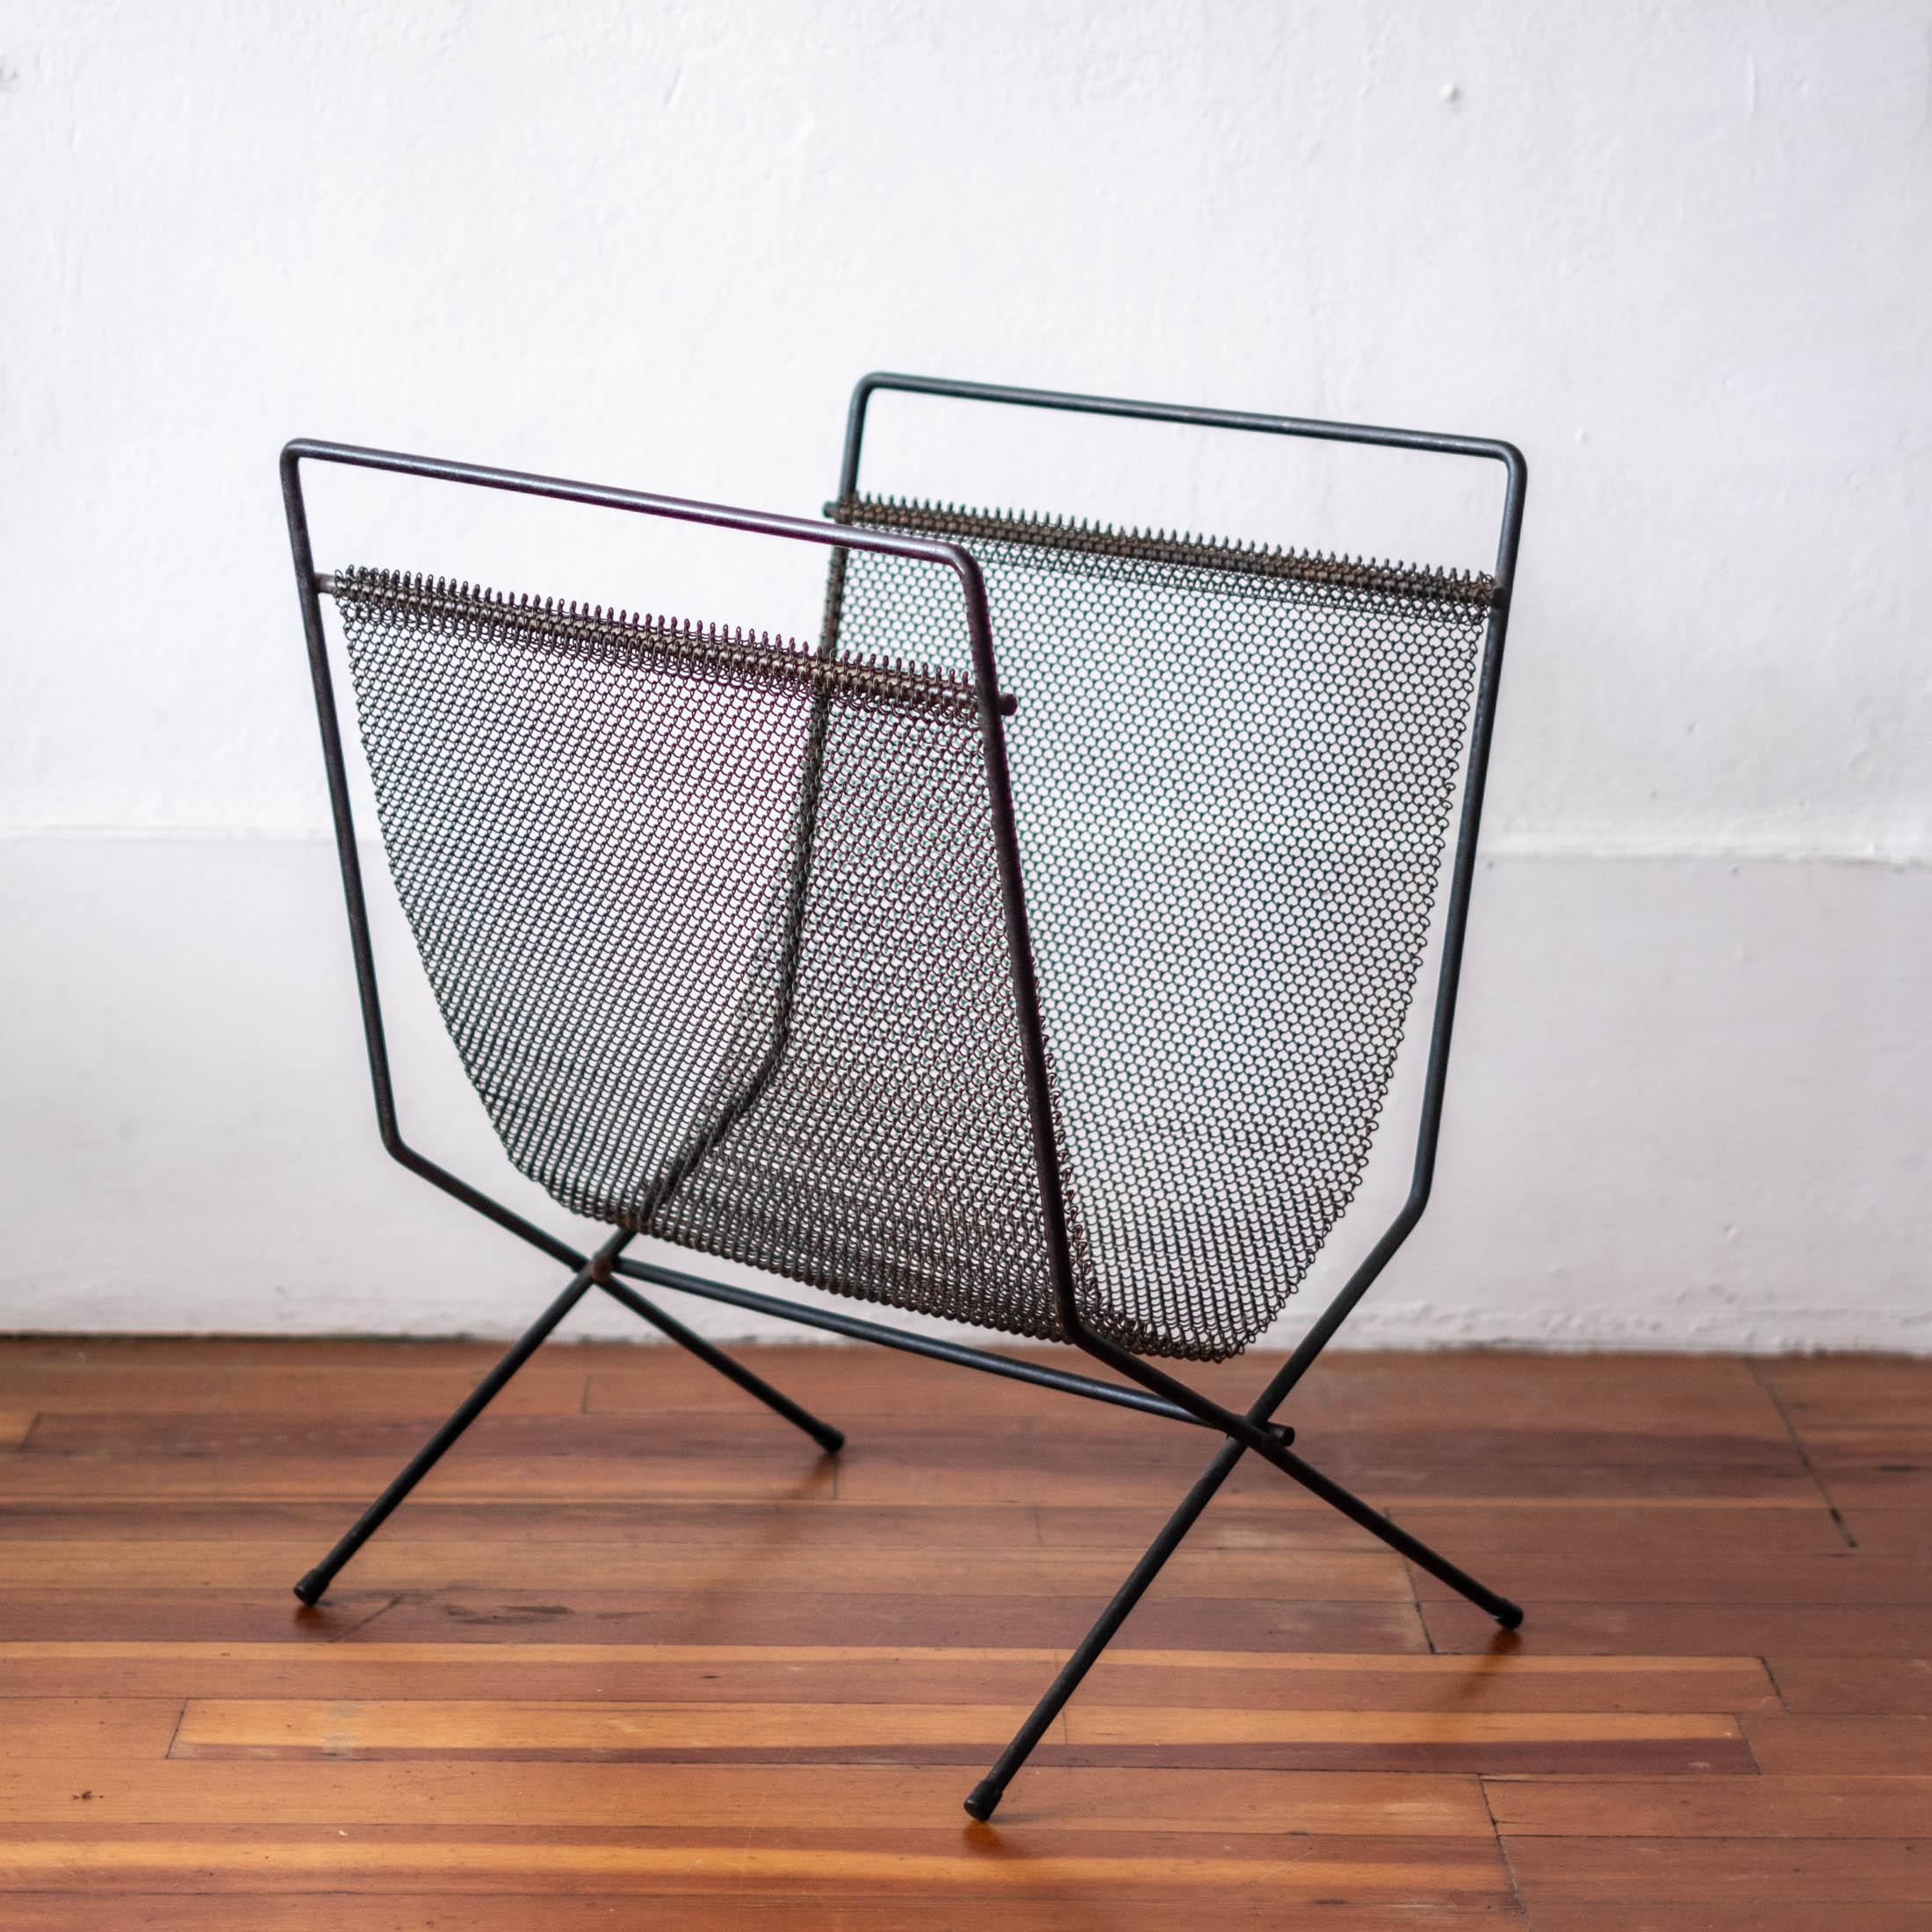 Modernist metal and iron log holder. Metal mesh sling with iron rod folding frame. Great Minimalist design.